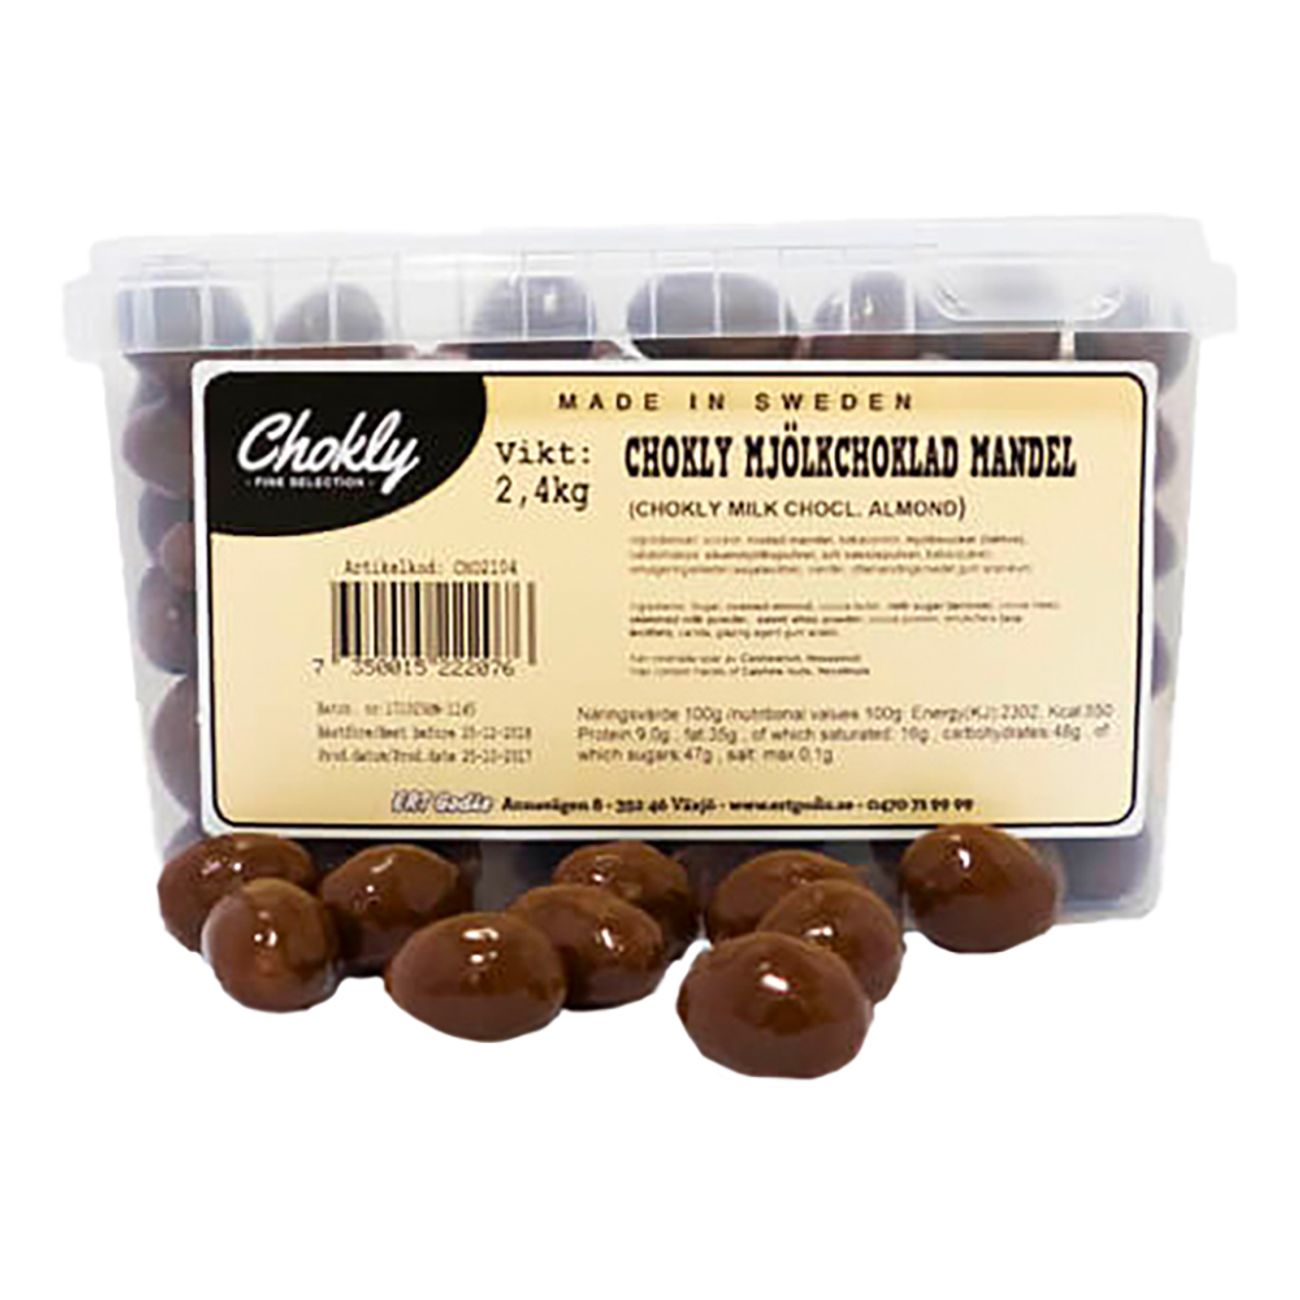 chokly-mjolkchoklad-mandel-storpack-87417-1